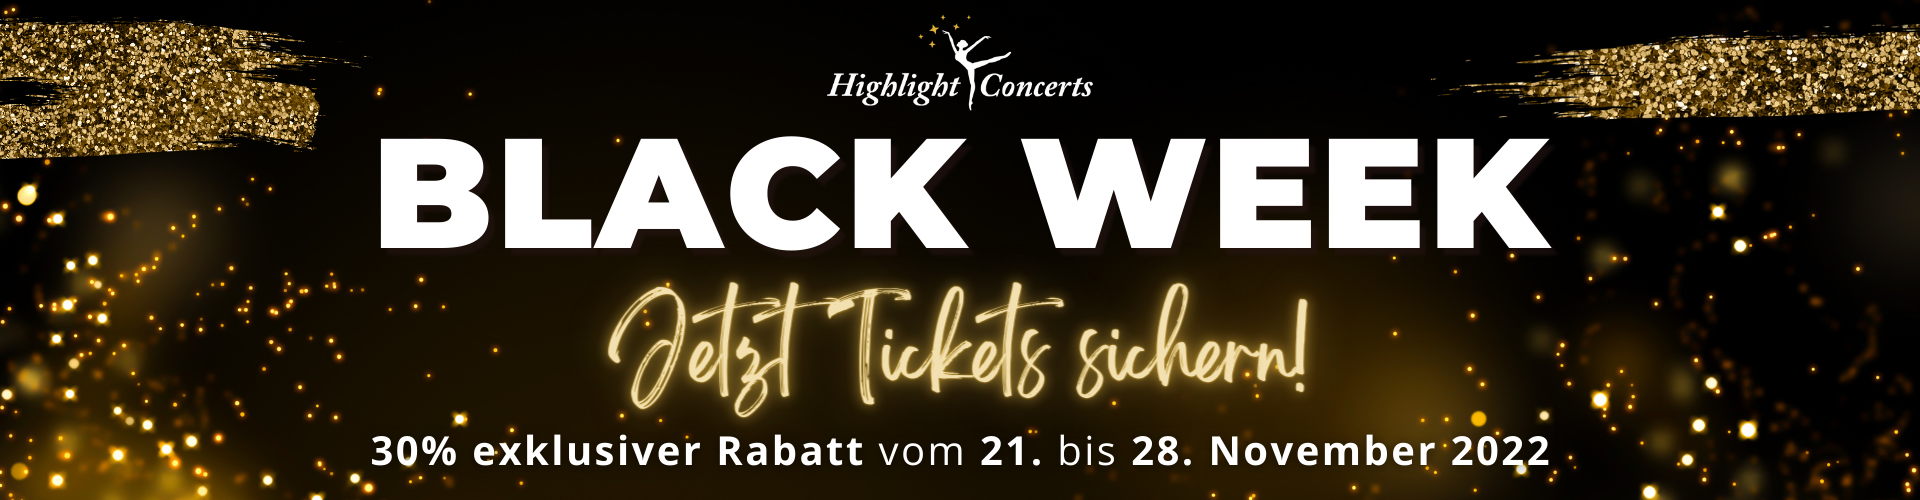 Black Week Highlight Concerts